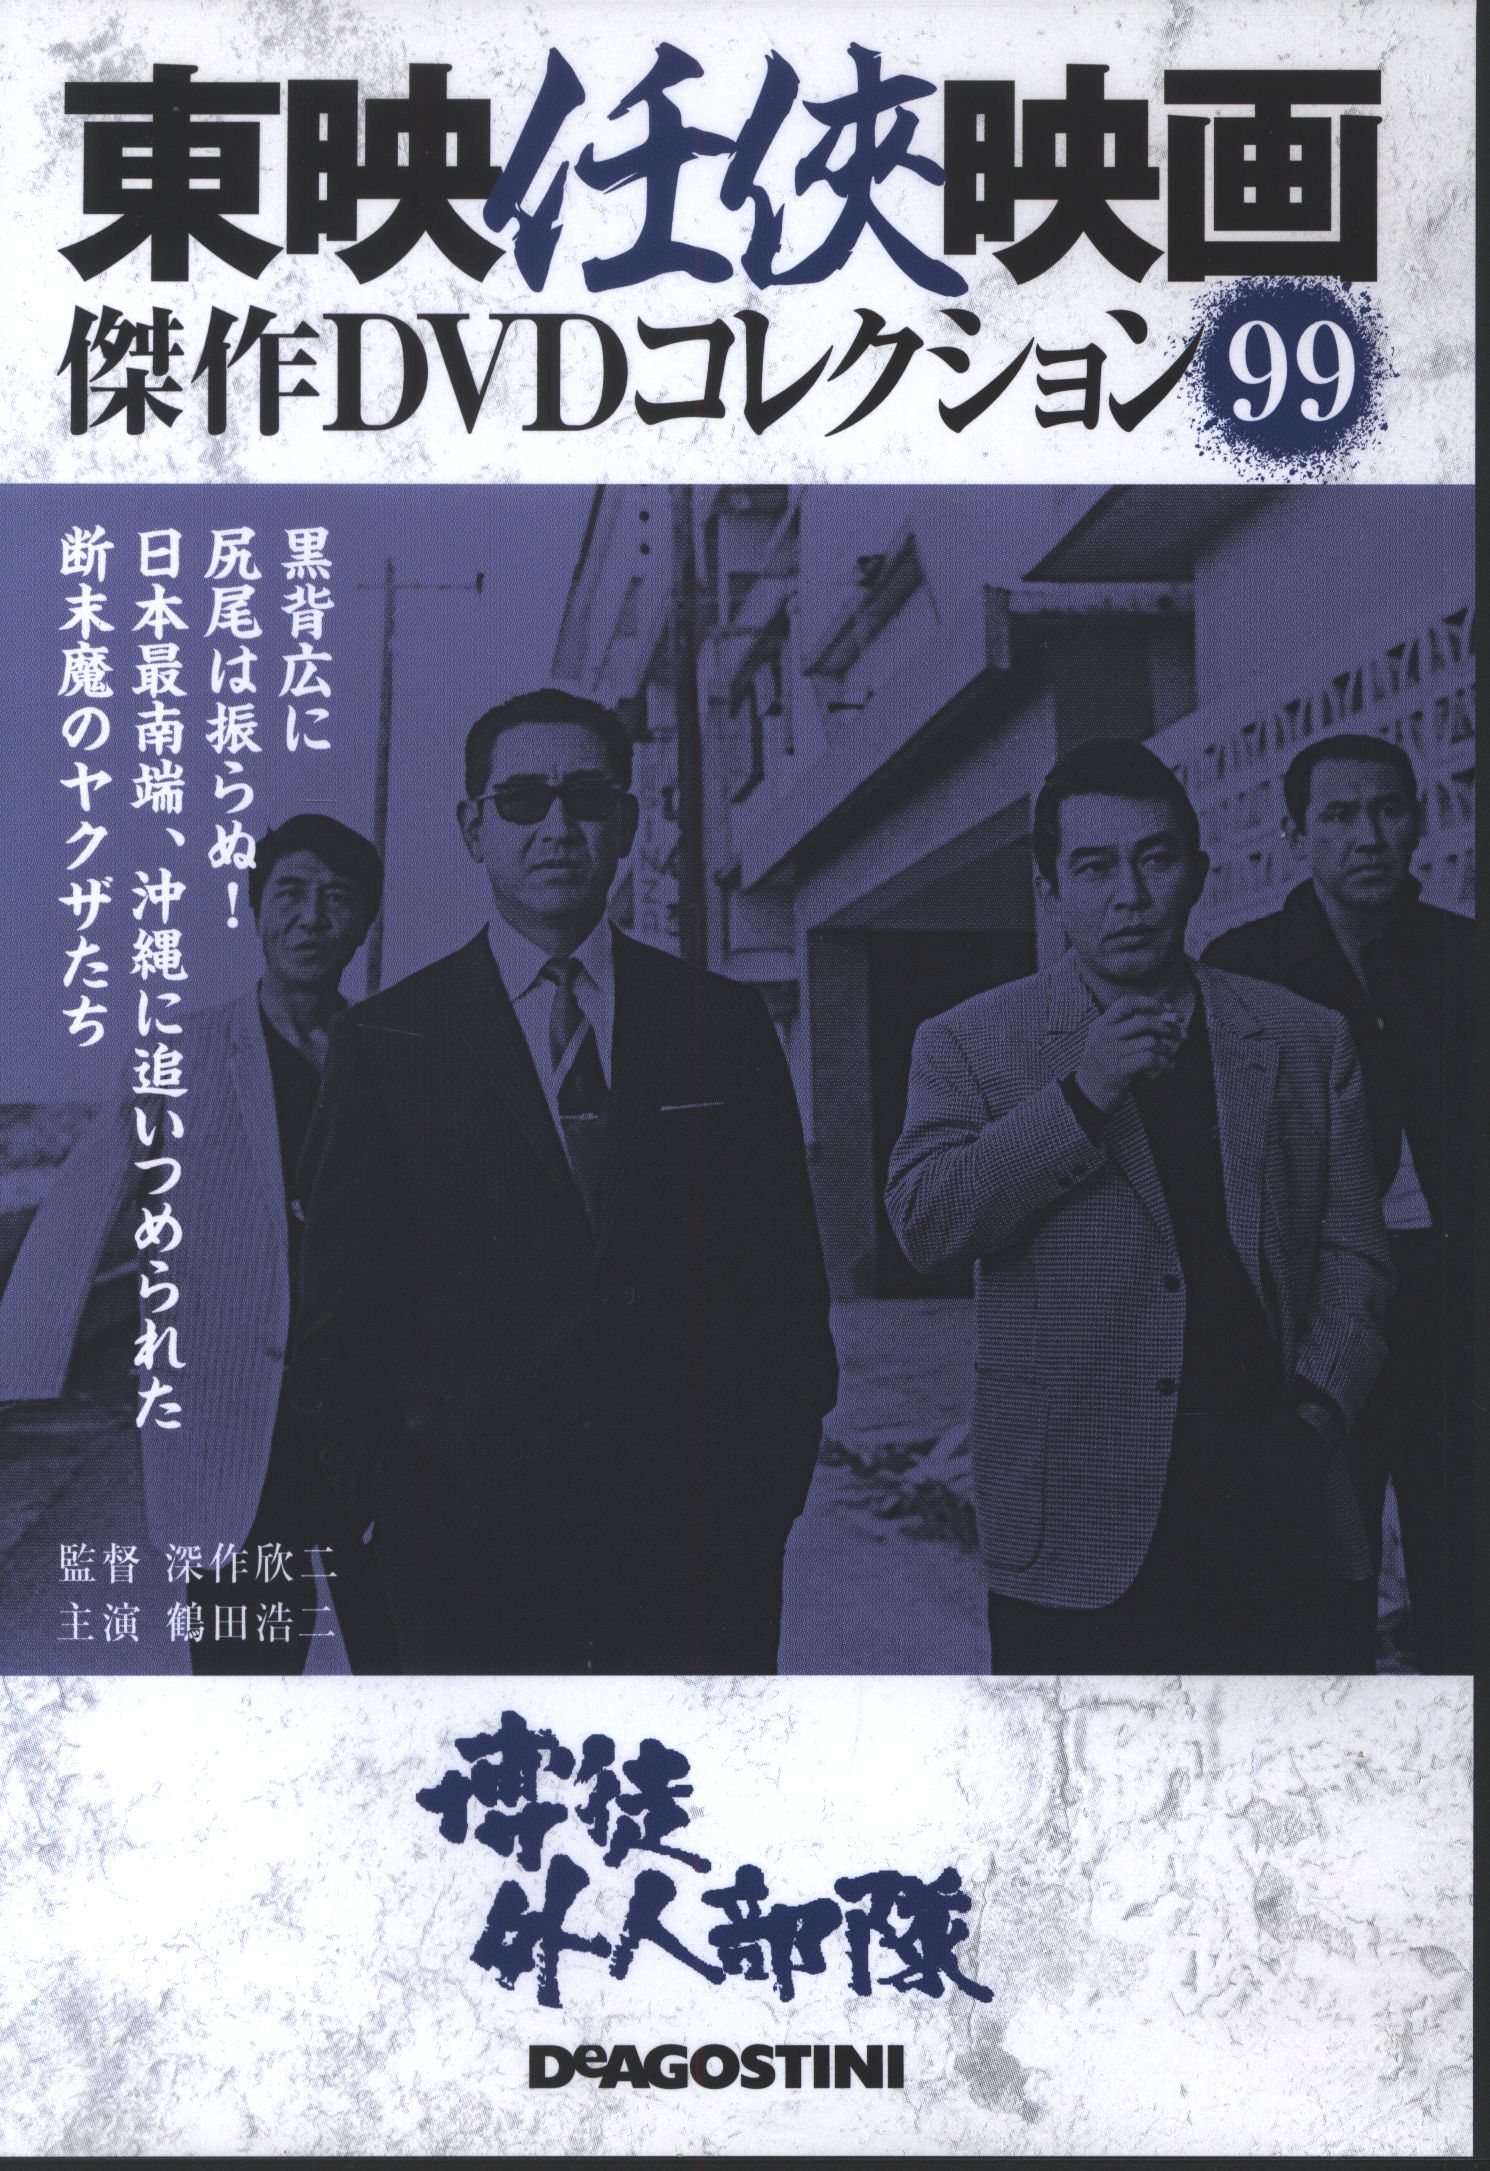 国内映画DVD 東映任侠映画 傑作DVDコレクション 99 博徒外人部隊 ...